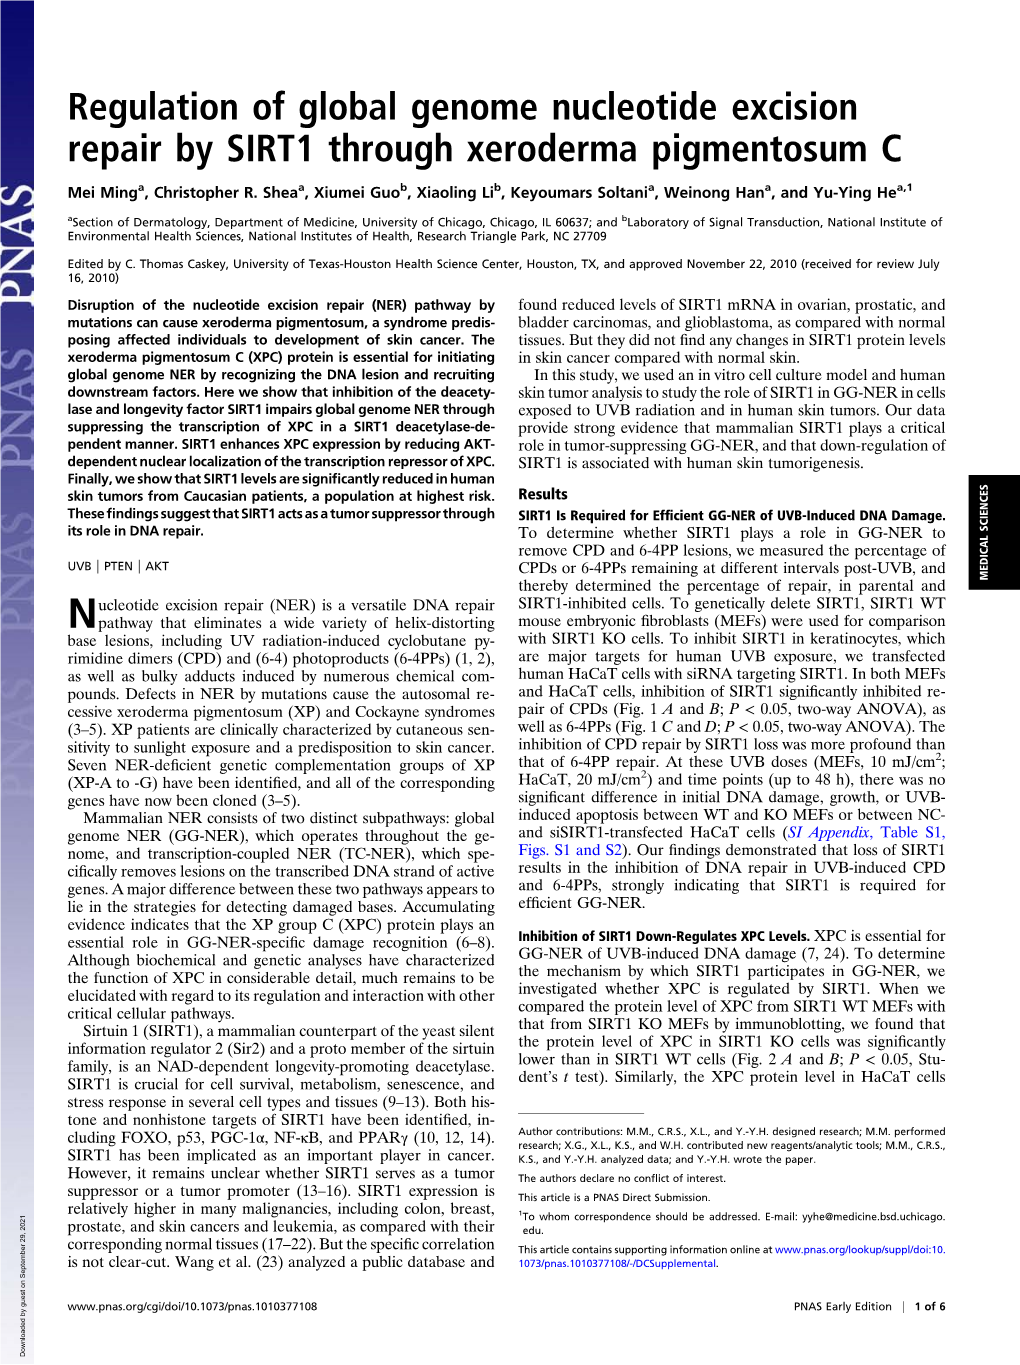 Regulation of Global Genome Nucleotide Excision Repair by SIRT1 Through Xeroderma Pigmentosum C